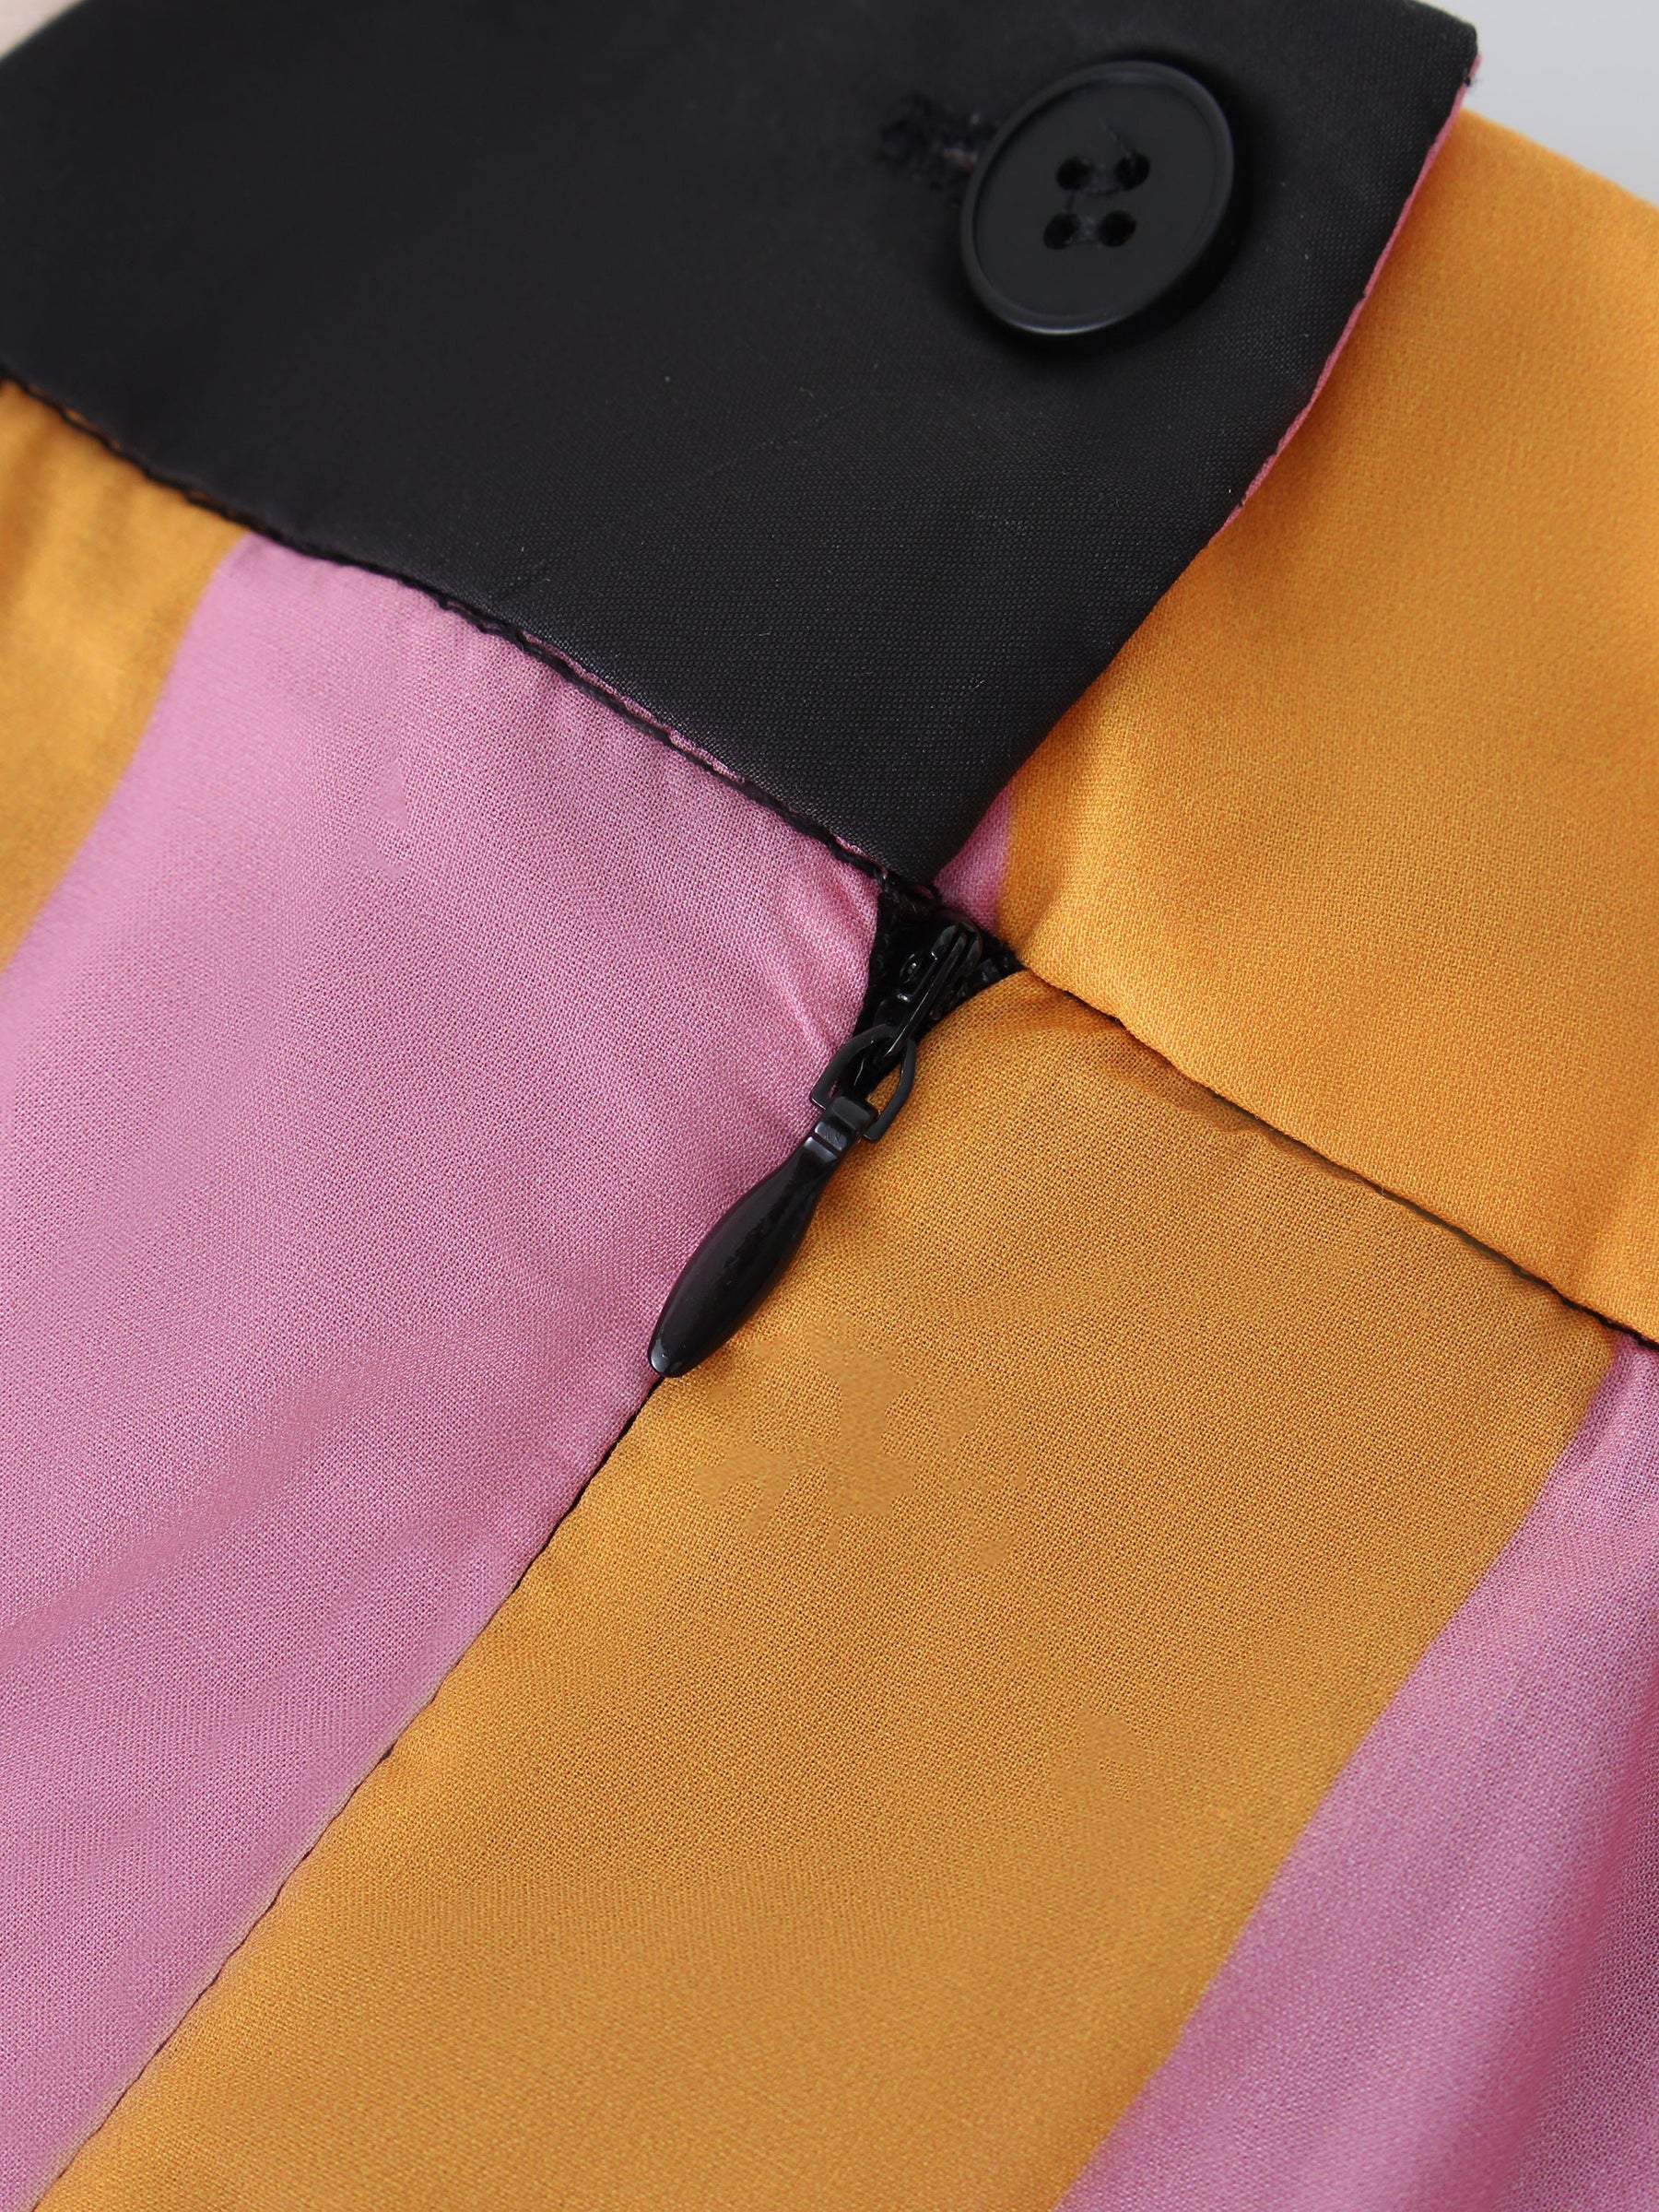 Multi Stripe Skirt-Black/Orange/Pink